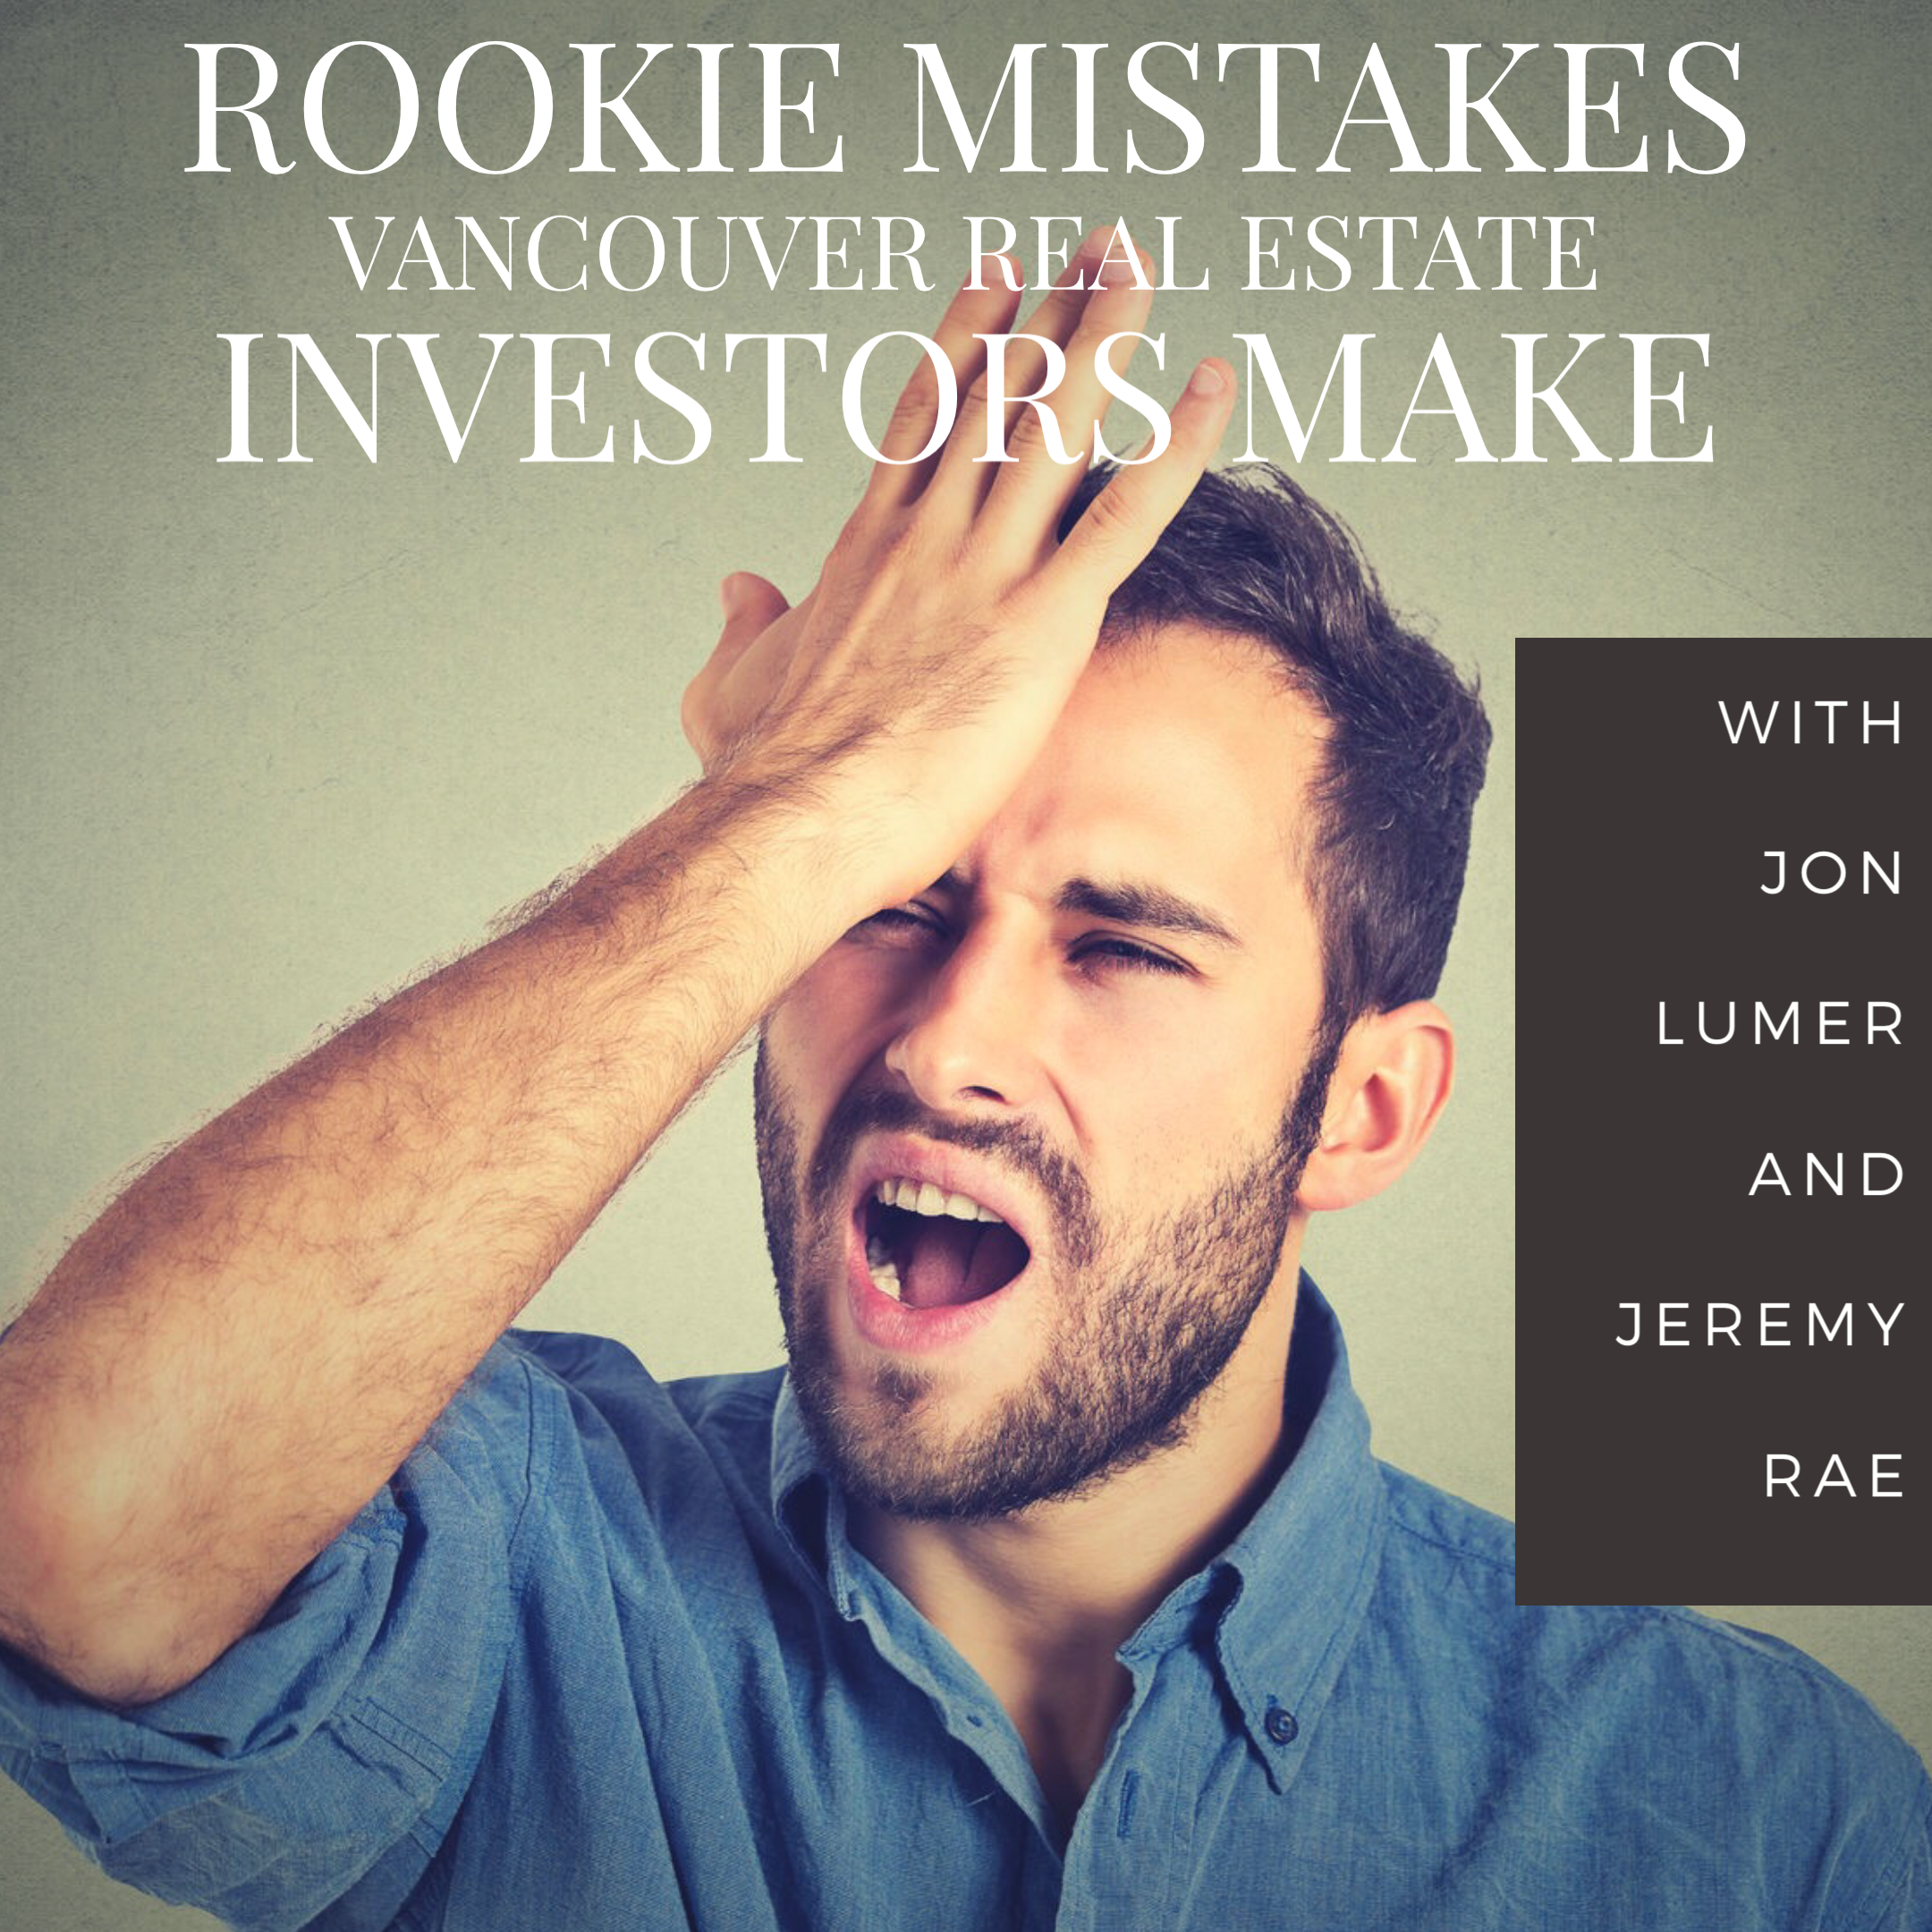 Rookie mistakes investors make